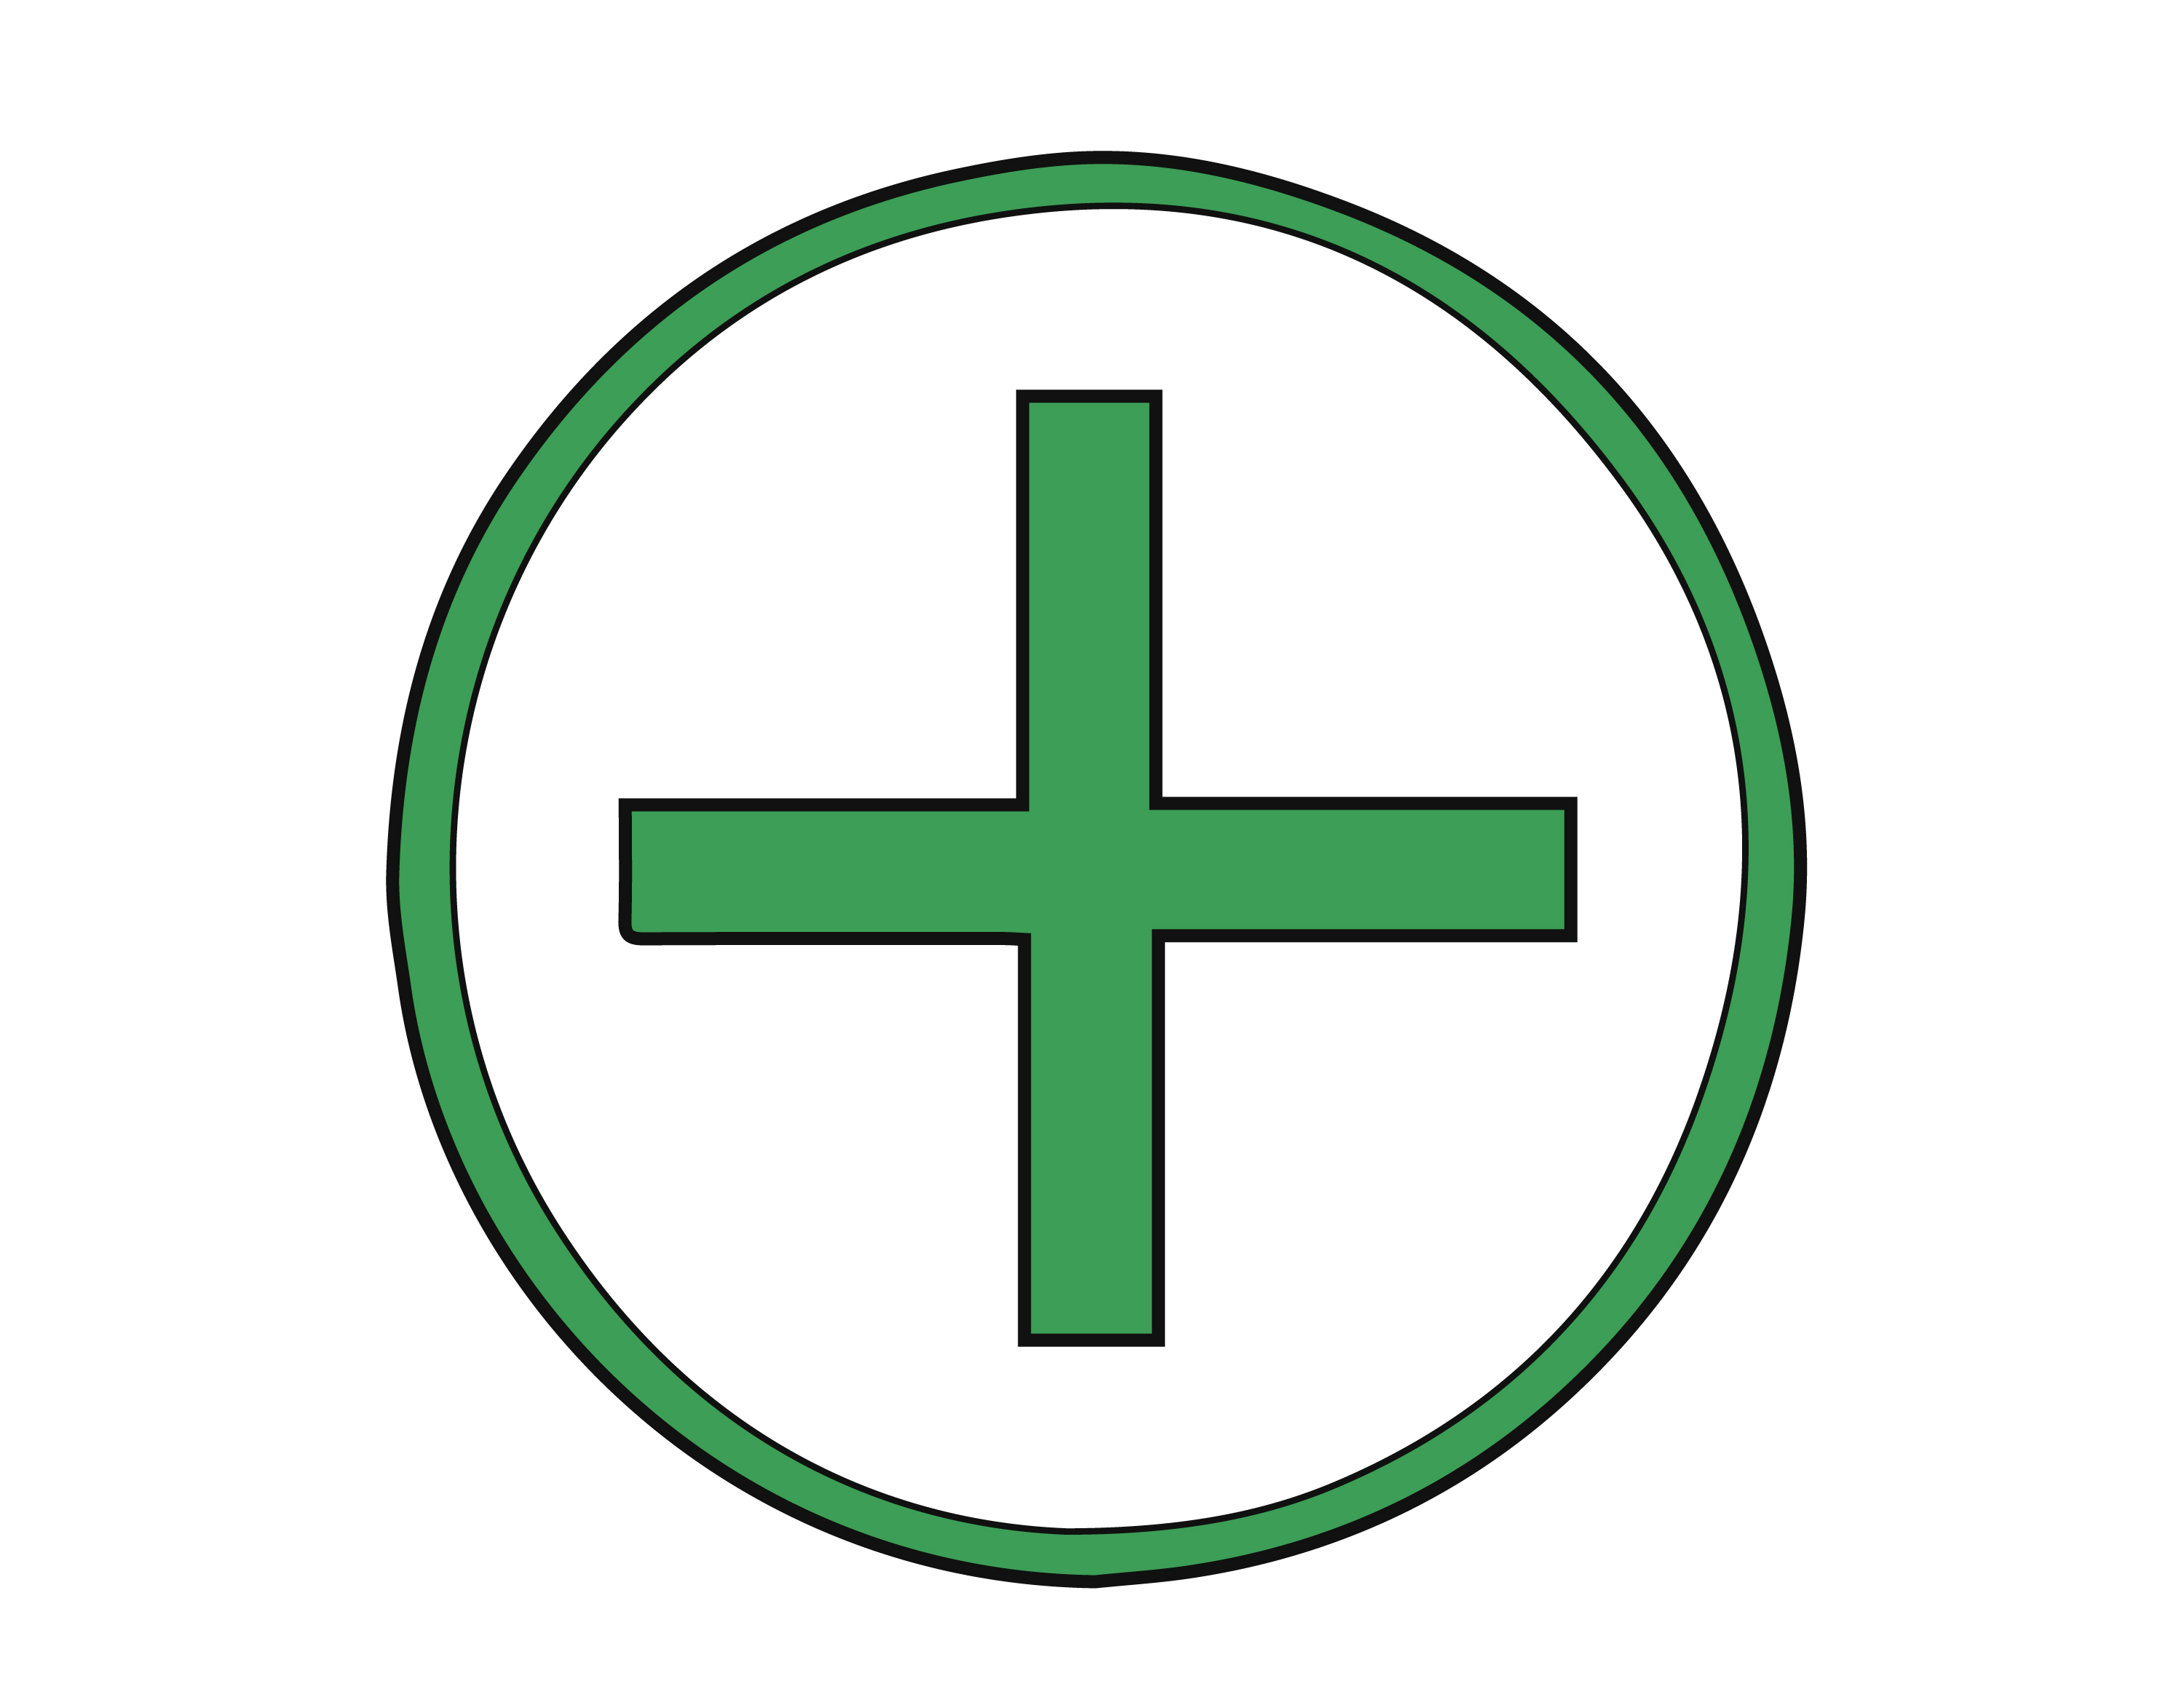 Celtic Symbol Chart